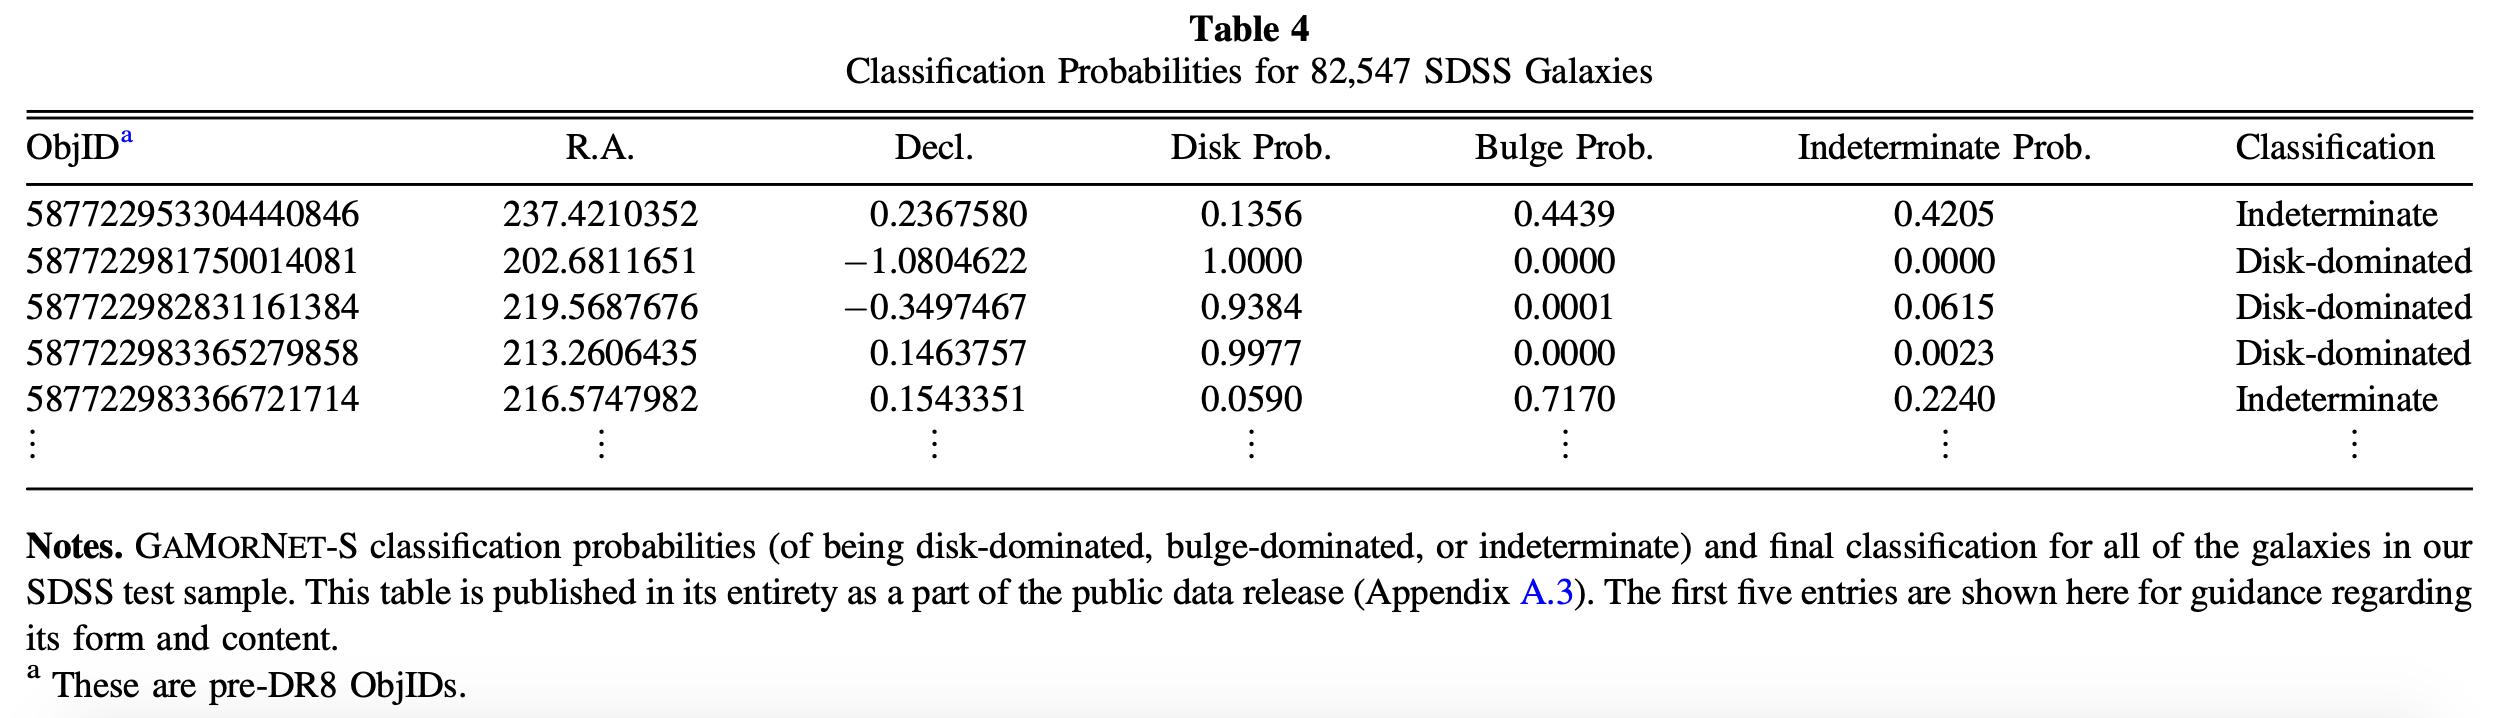 SDSS Prediction
									Table